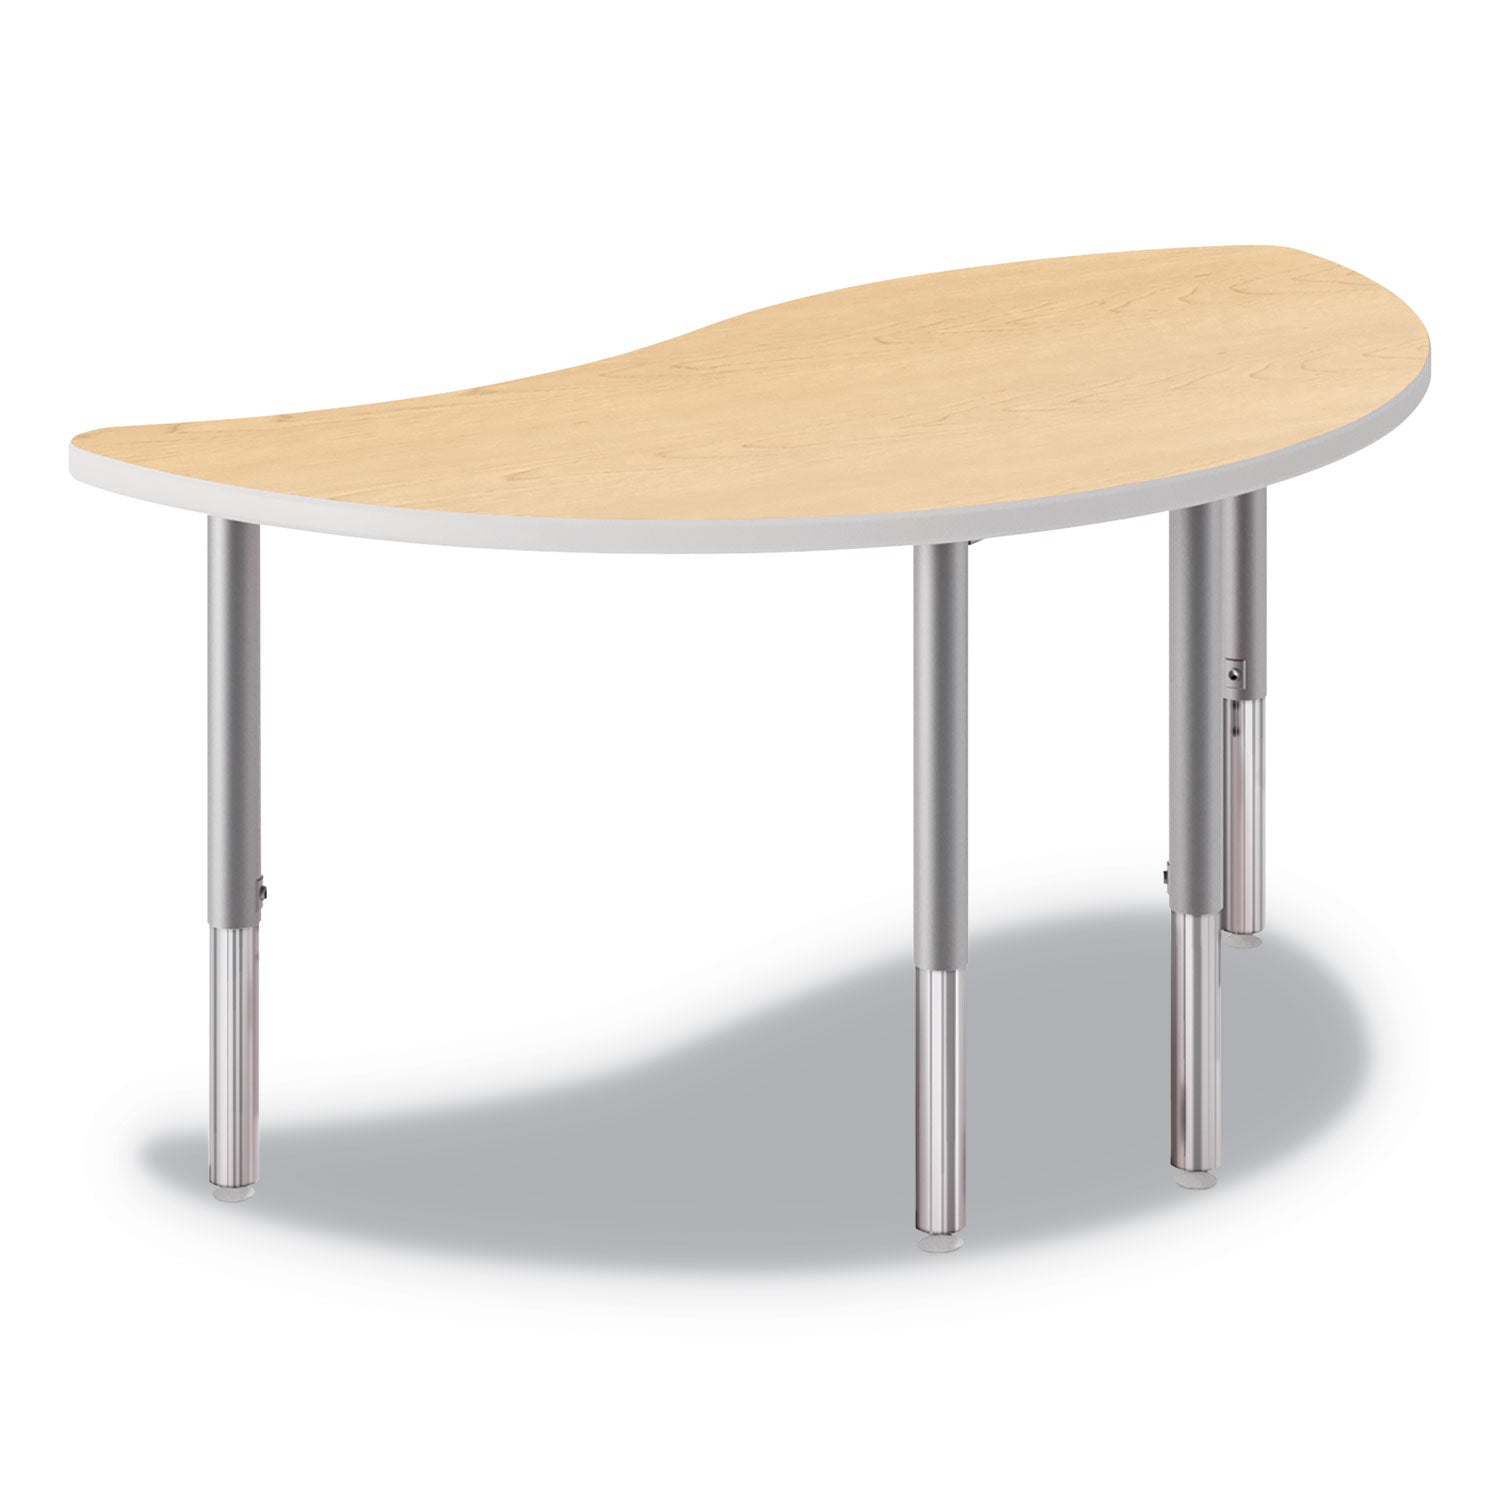 build-wisp-shape-table-top-54w-x-30d-natural-maple_honsn3054endk - 2